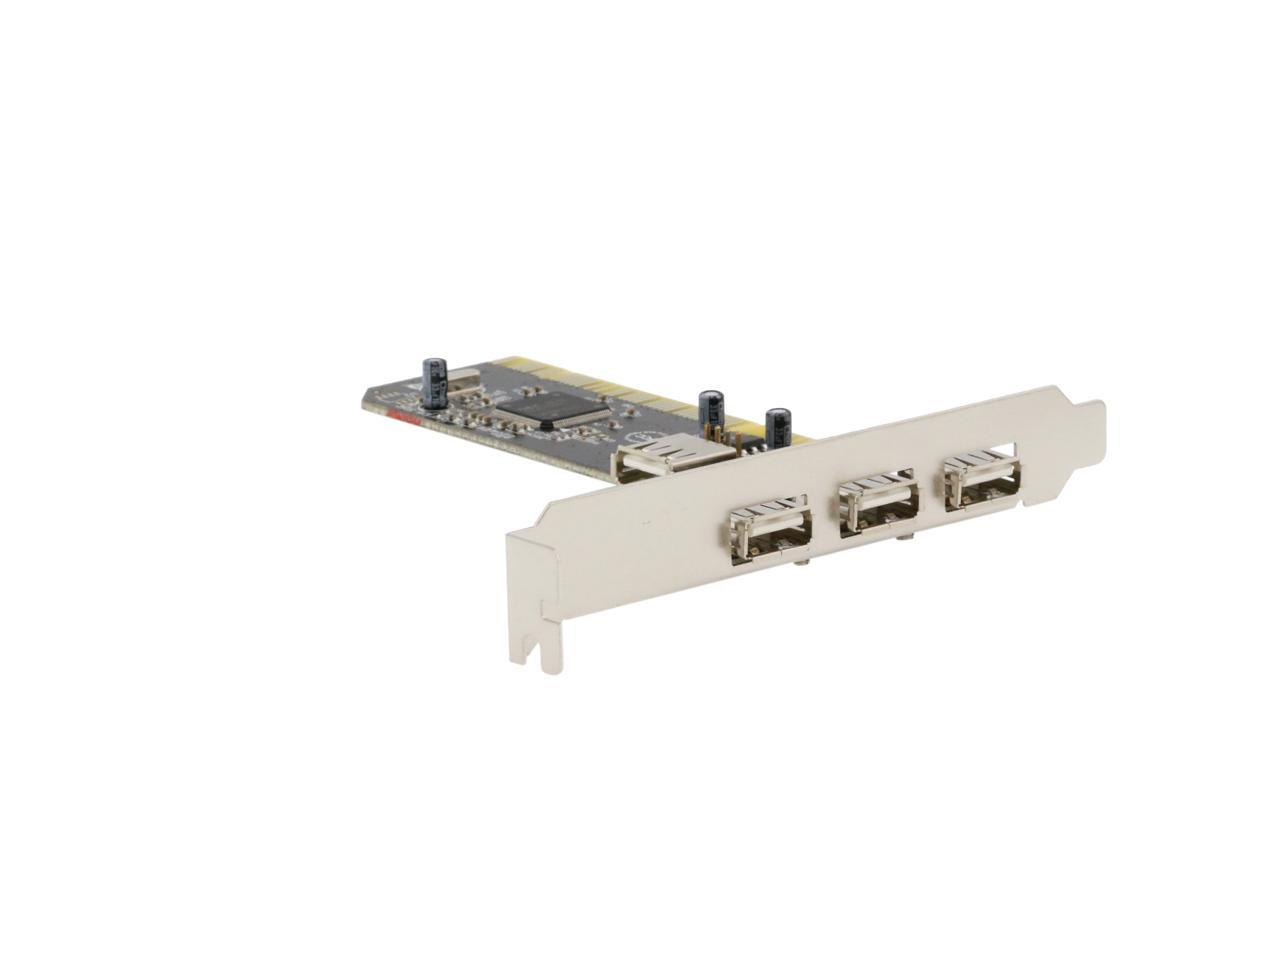 Belkin USB Internal Bus Port PCI Card 2USB Ports 12MBPS Plug and Play